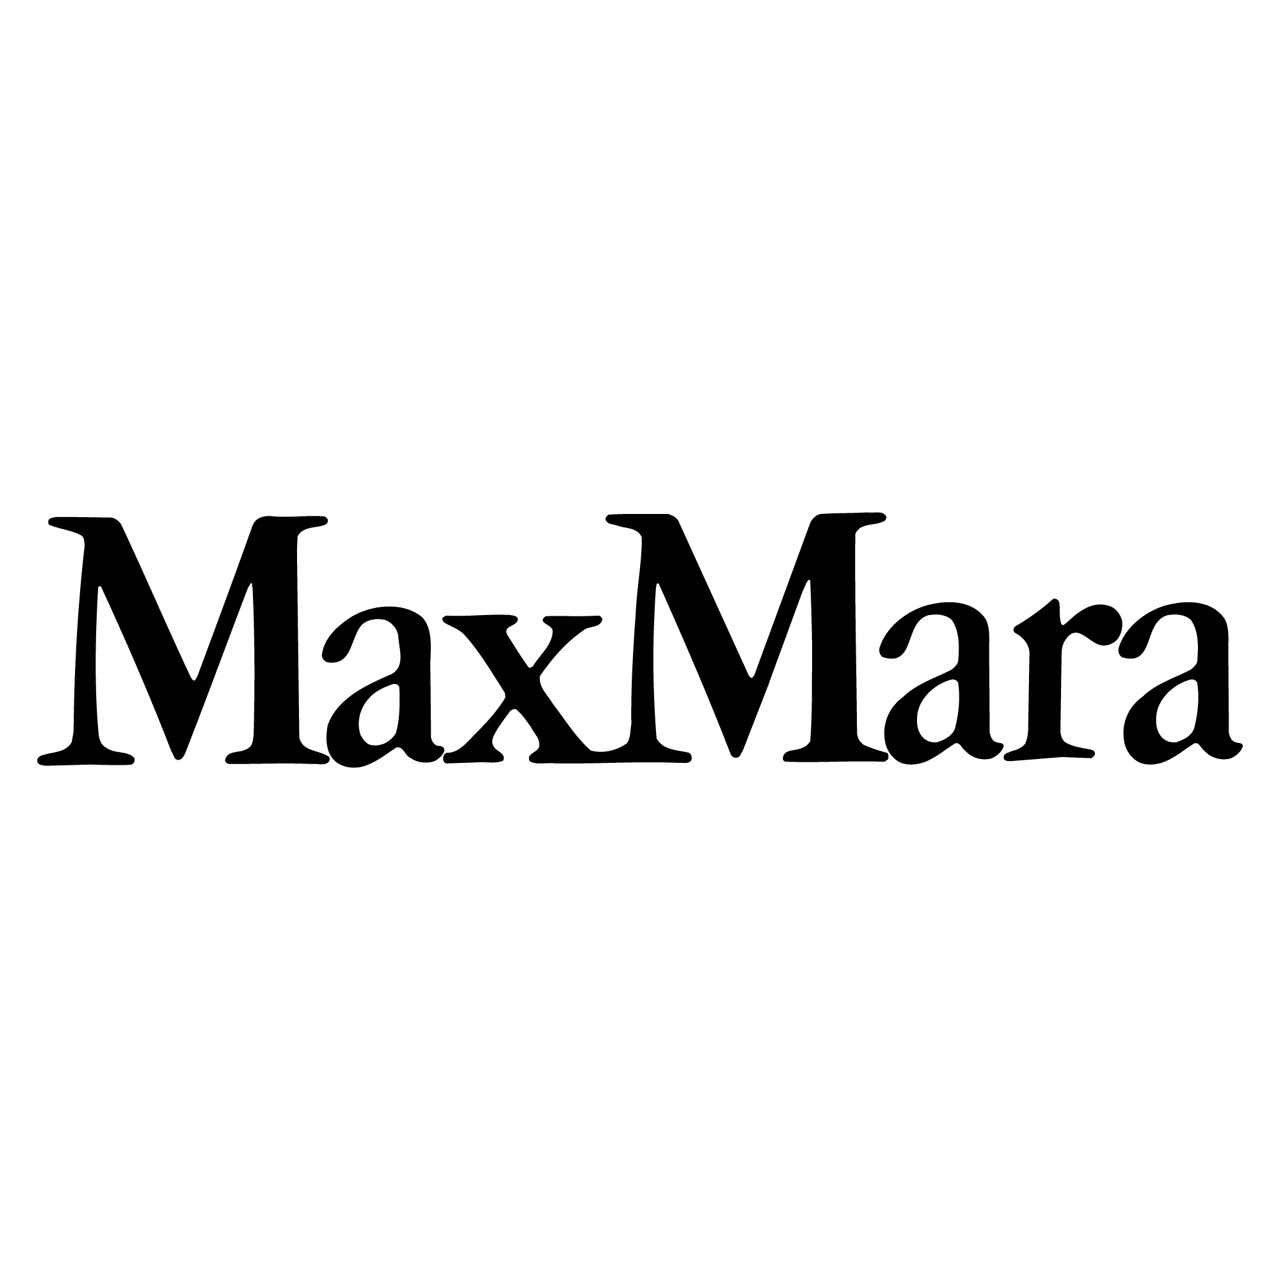 Max Mara - Women's Clothing Stores